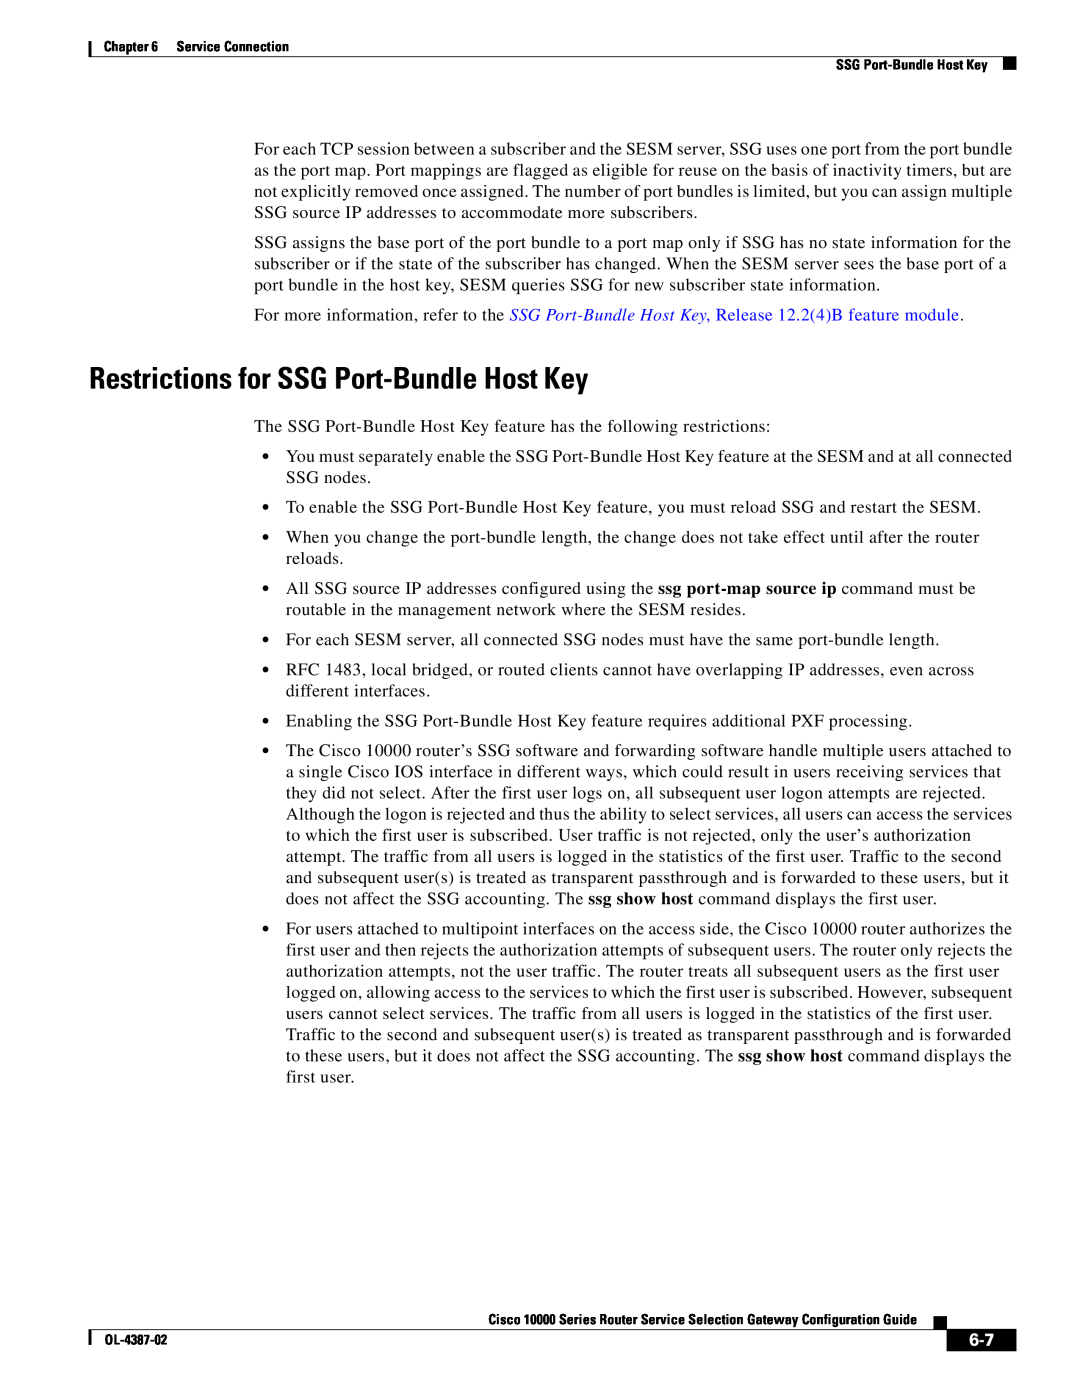 Cisco Systems OL-4387-02 manual Restrictions for SSG Port-Bundle Host Key 